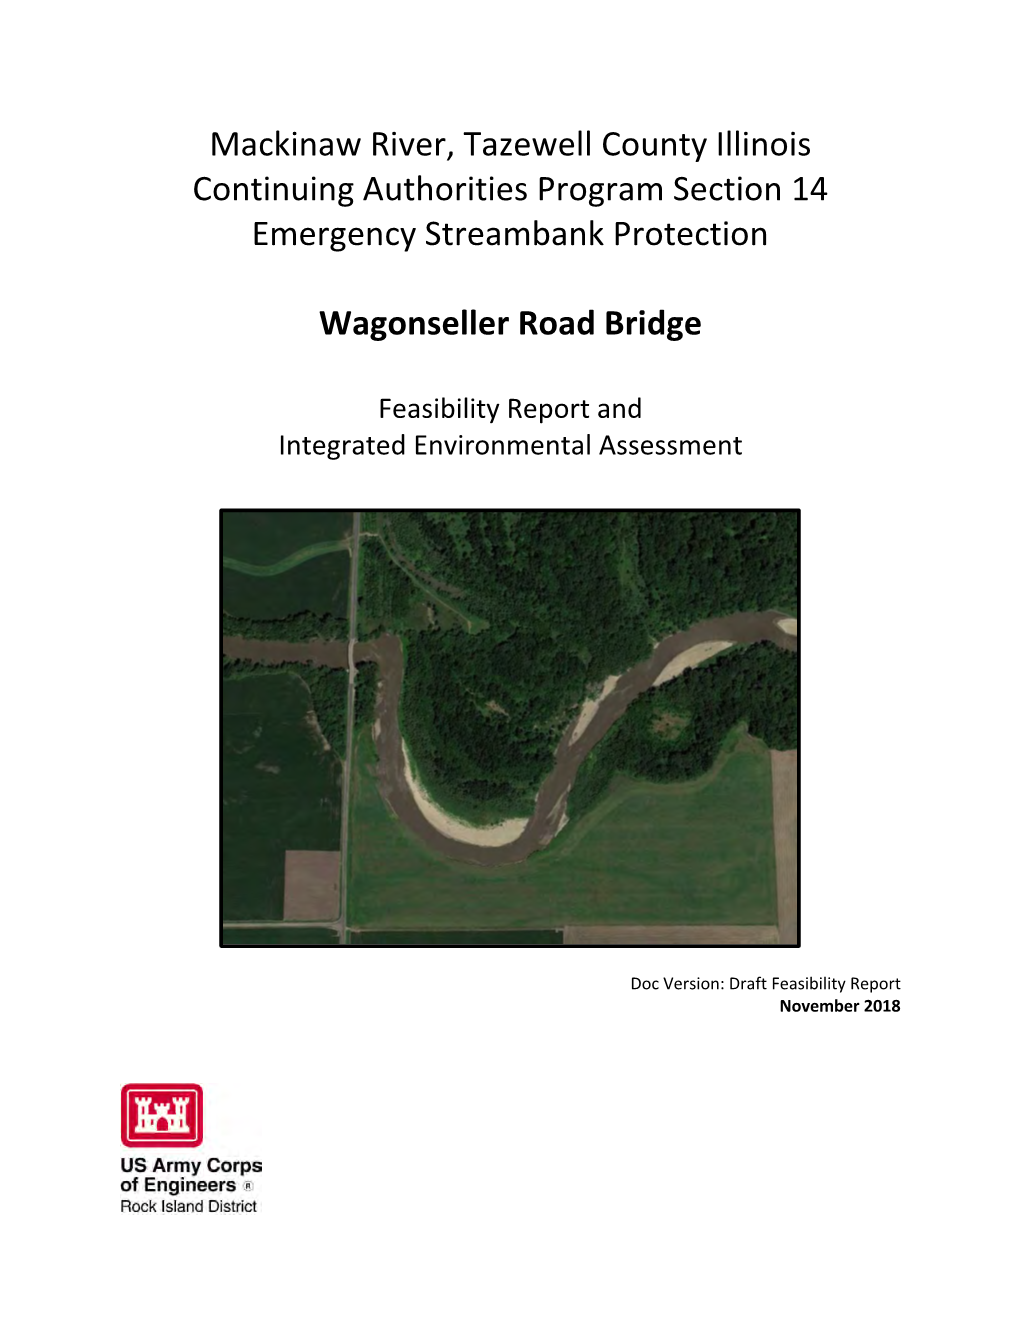 Wagonseller Road Bridge Feasibility Report MDM Edits.Docx